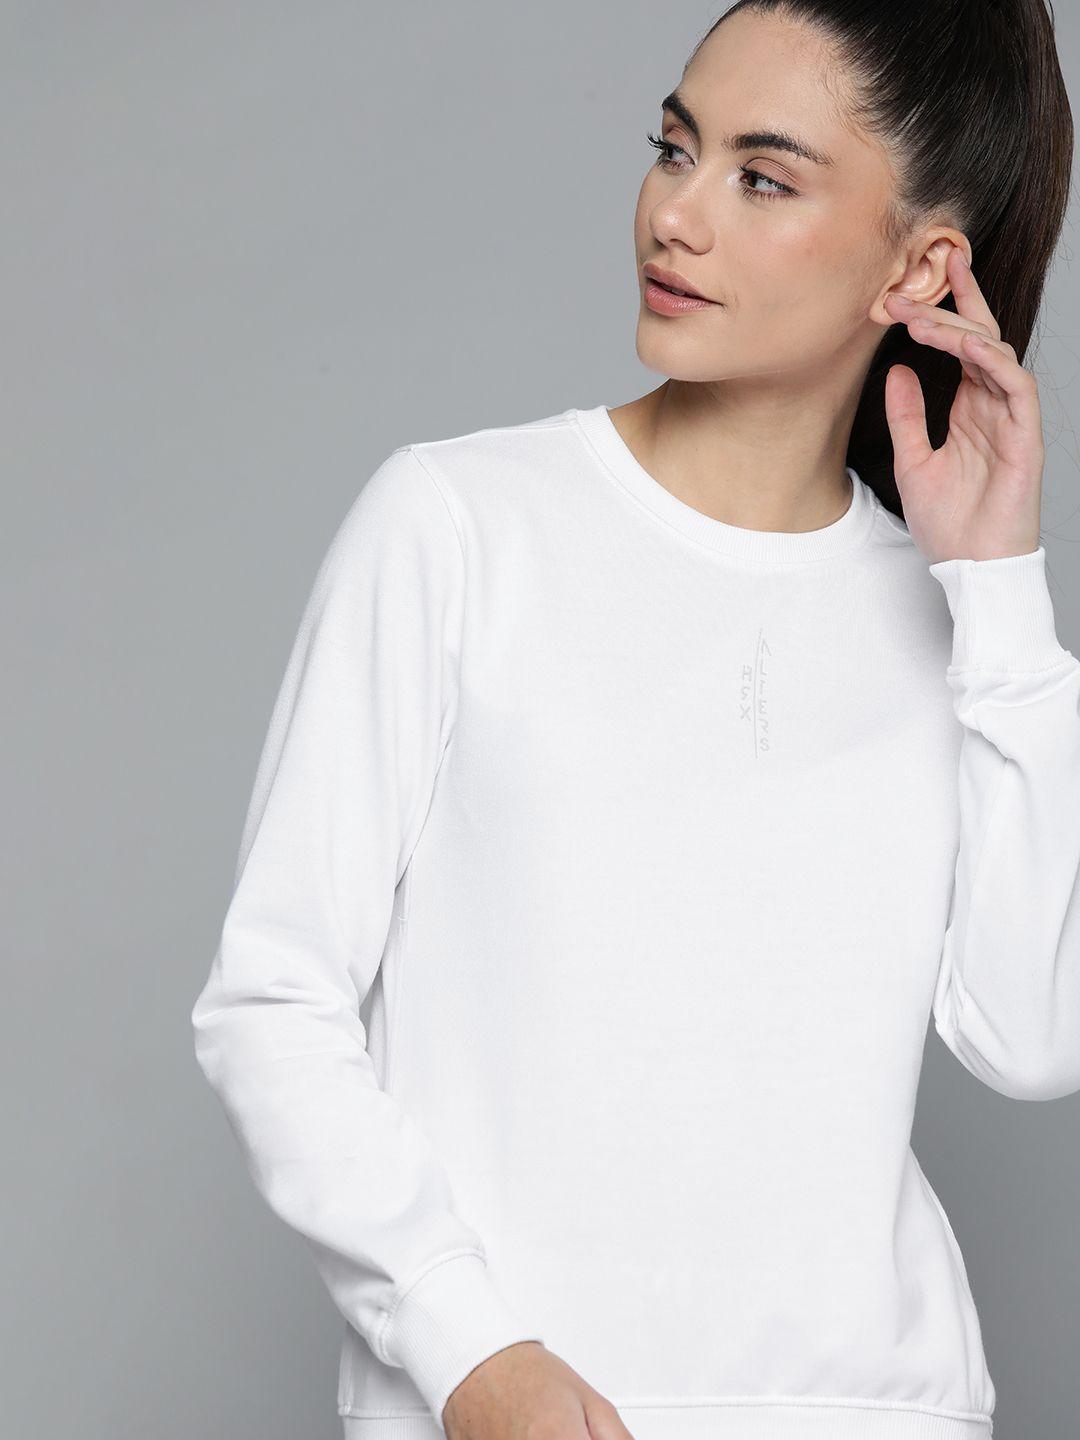 hrx by hrithik roshan women white sweatshirt